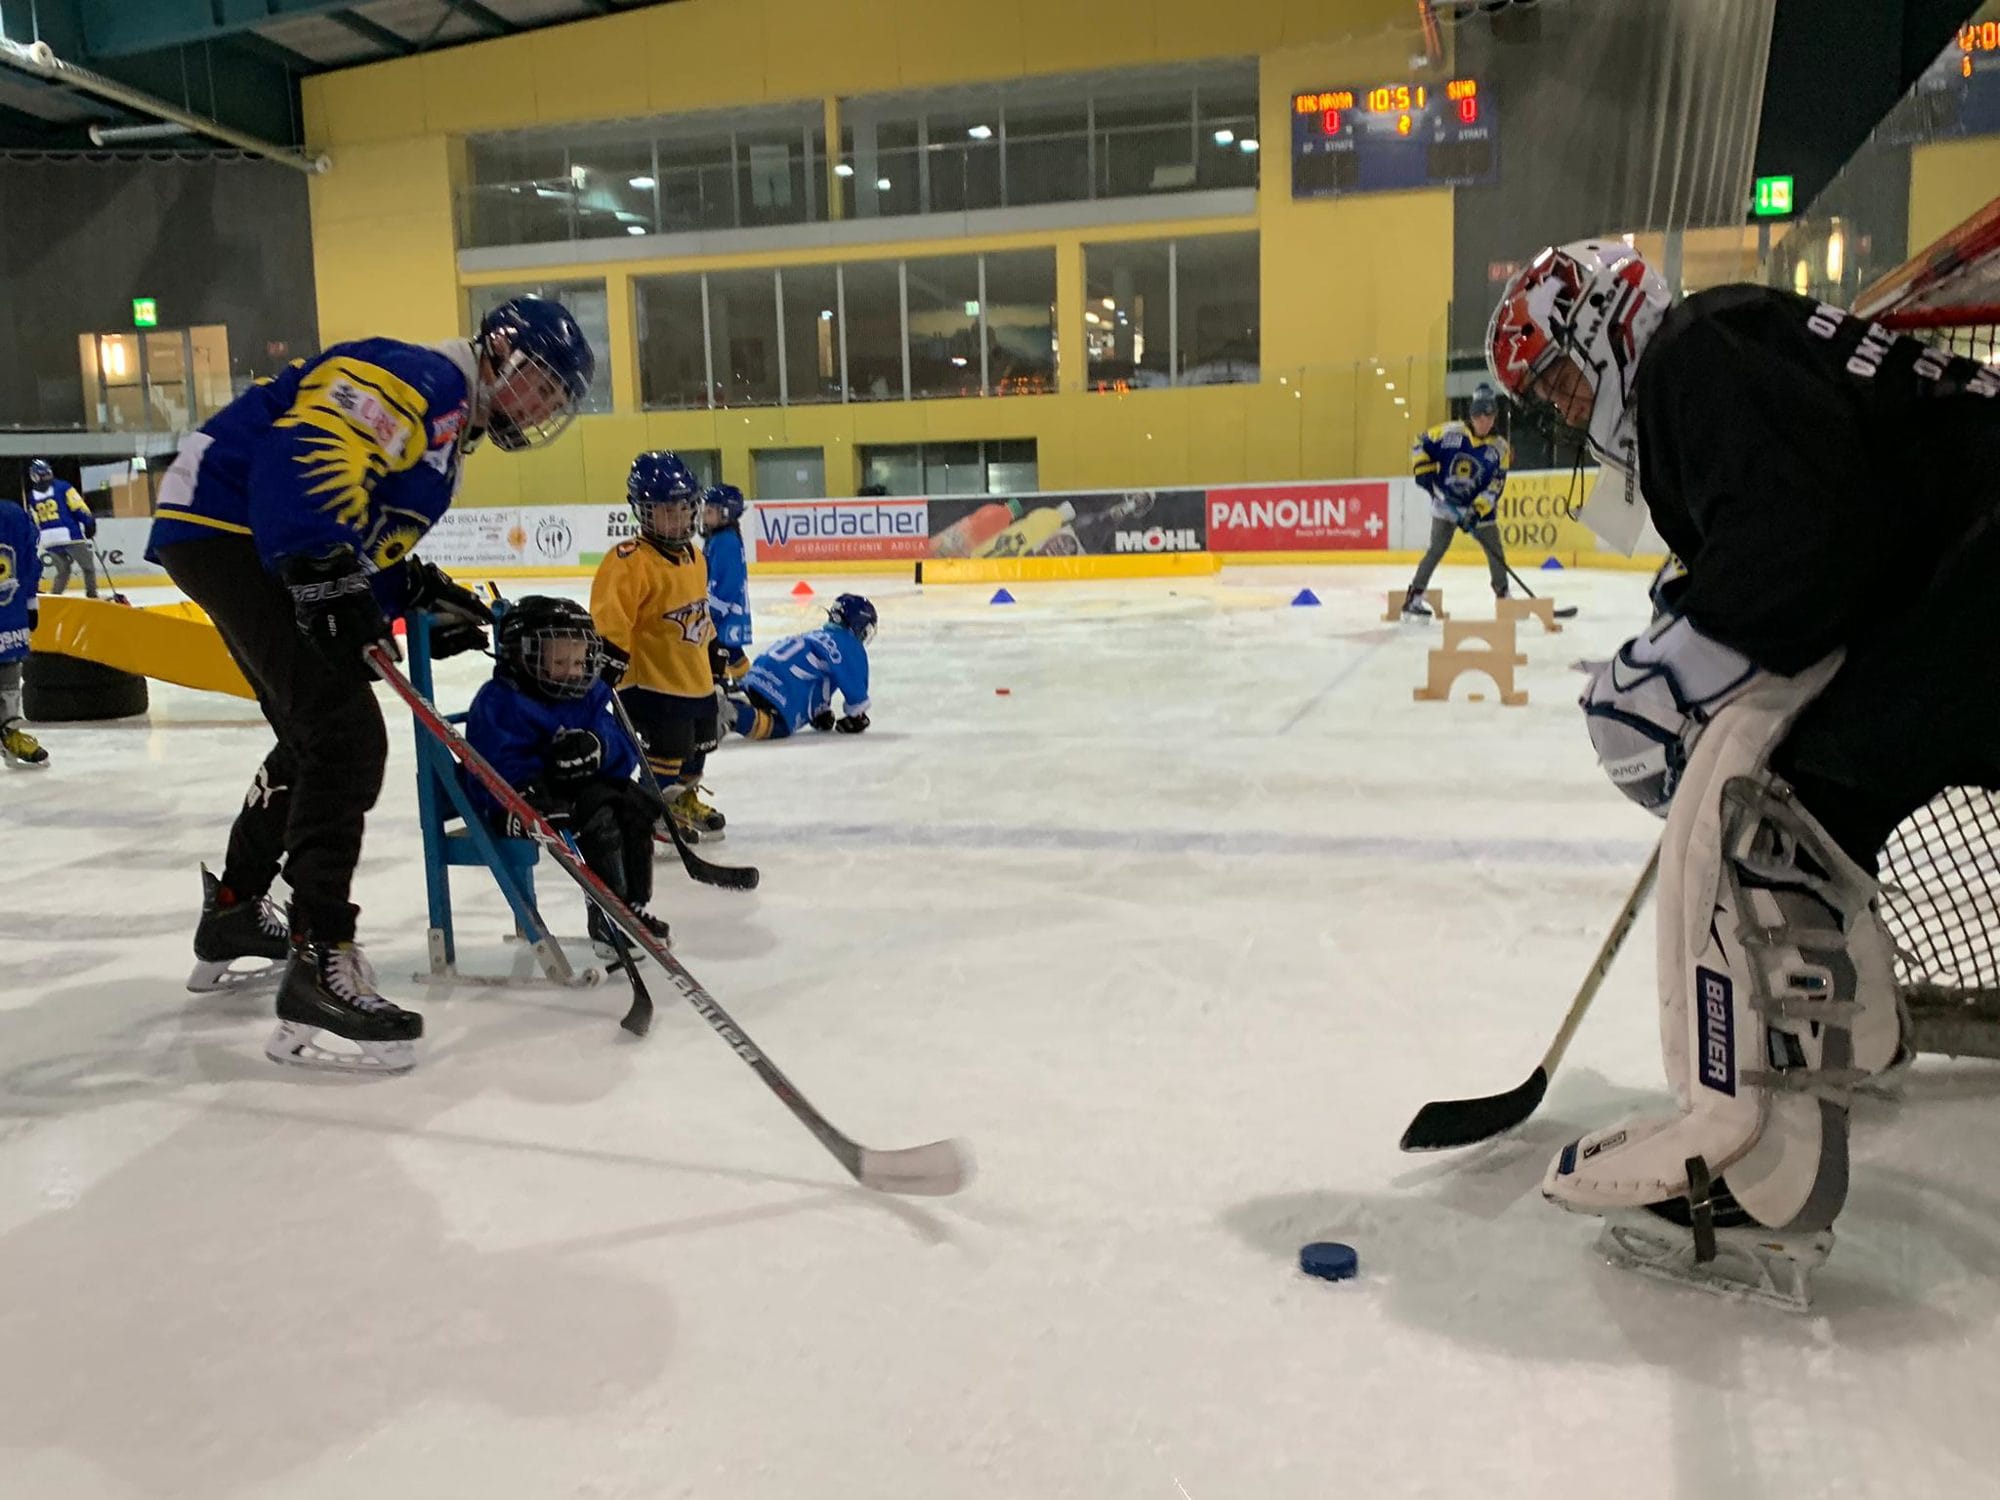 Swiss Ice Hockey Day 2019 in Arosa.